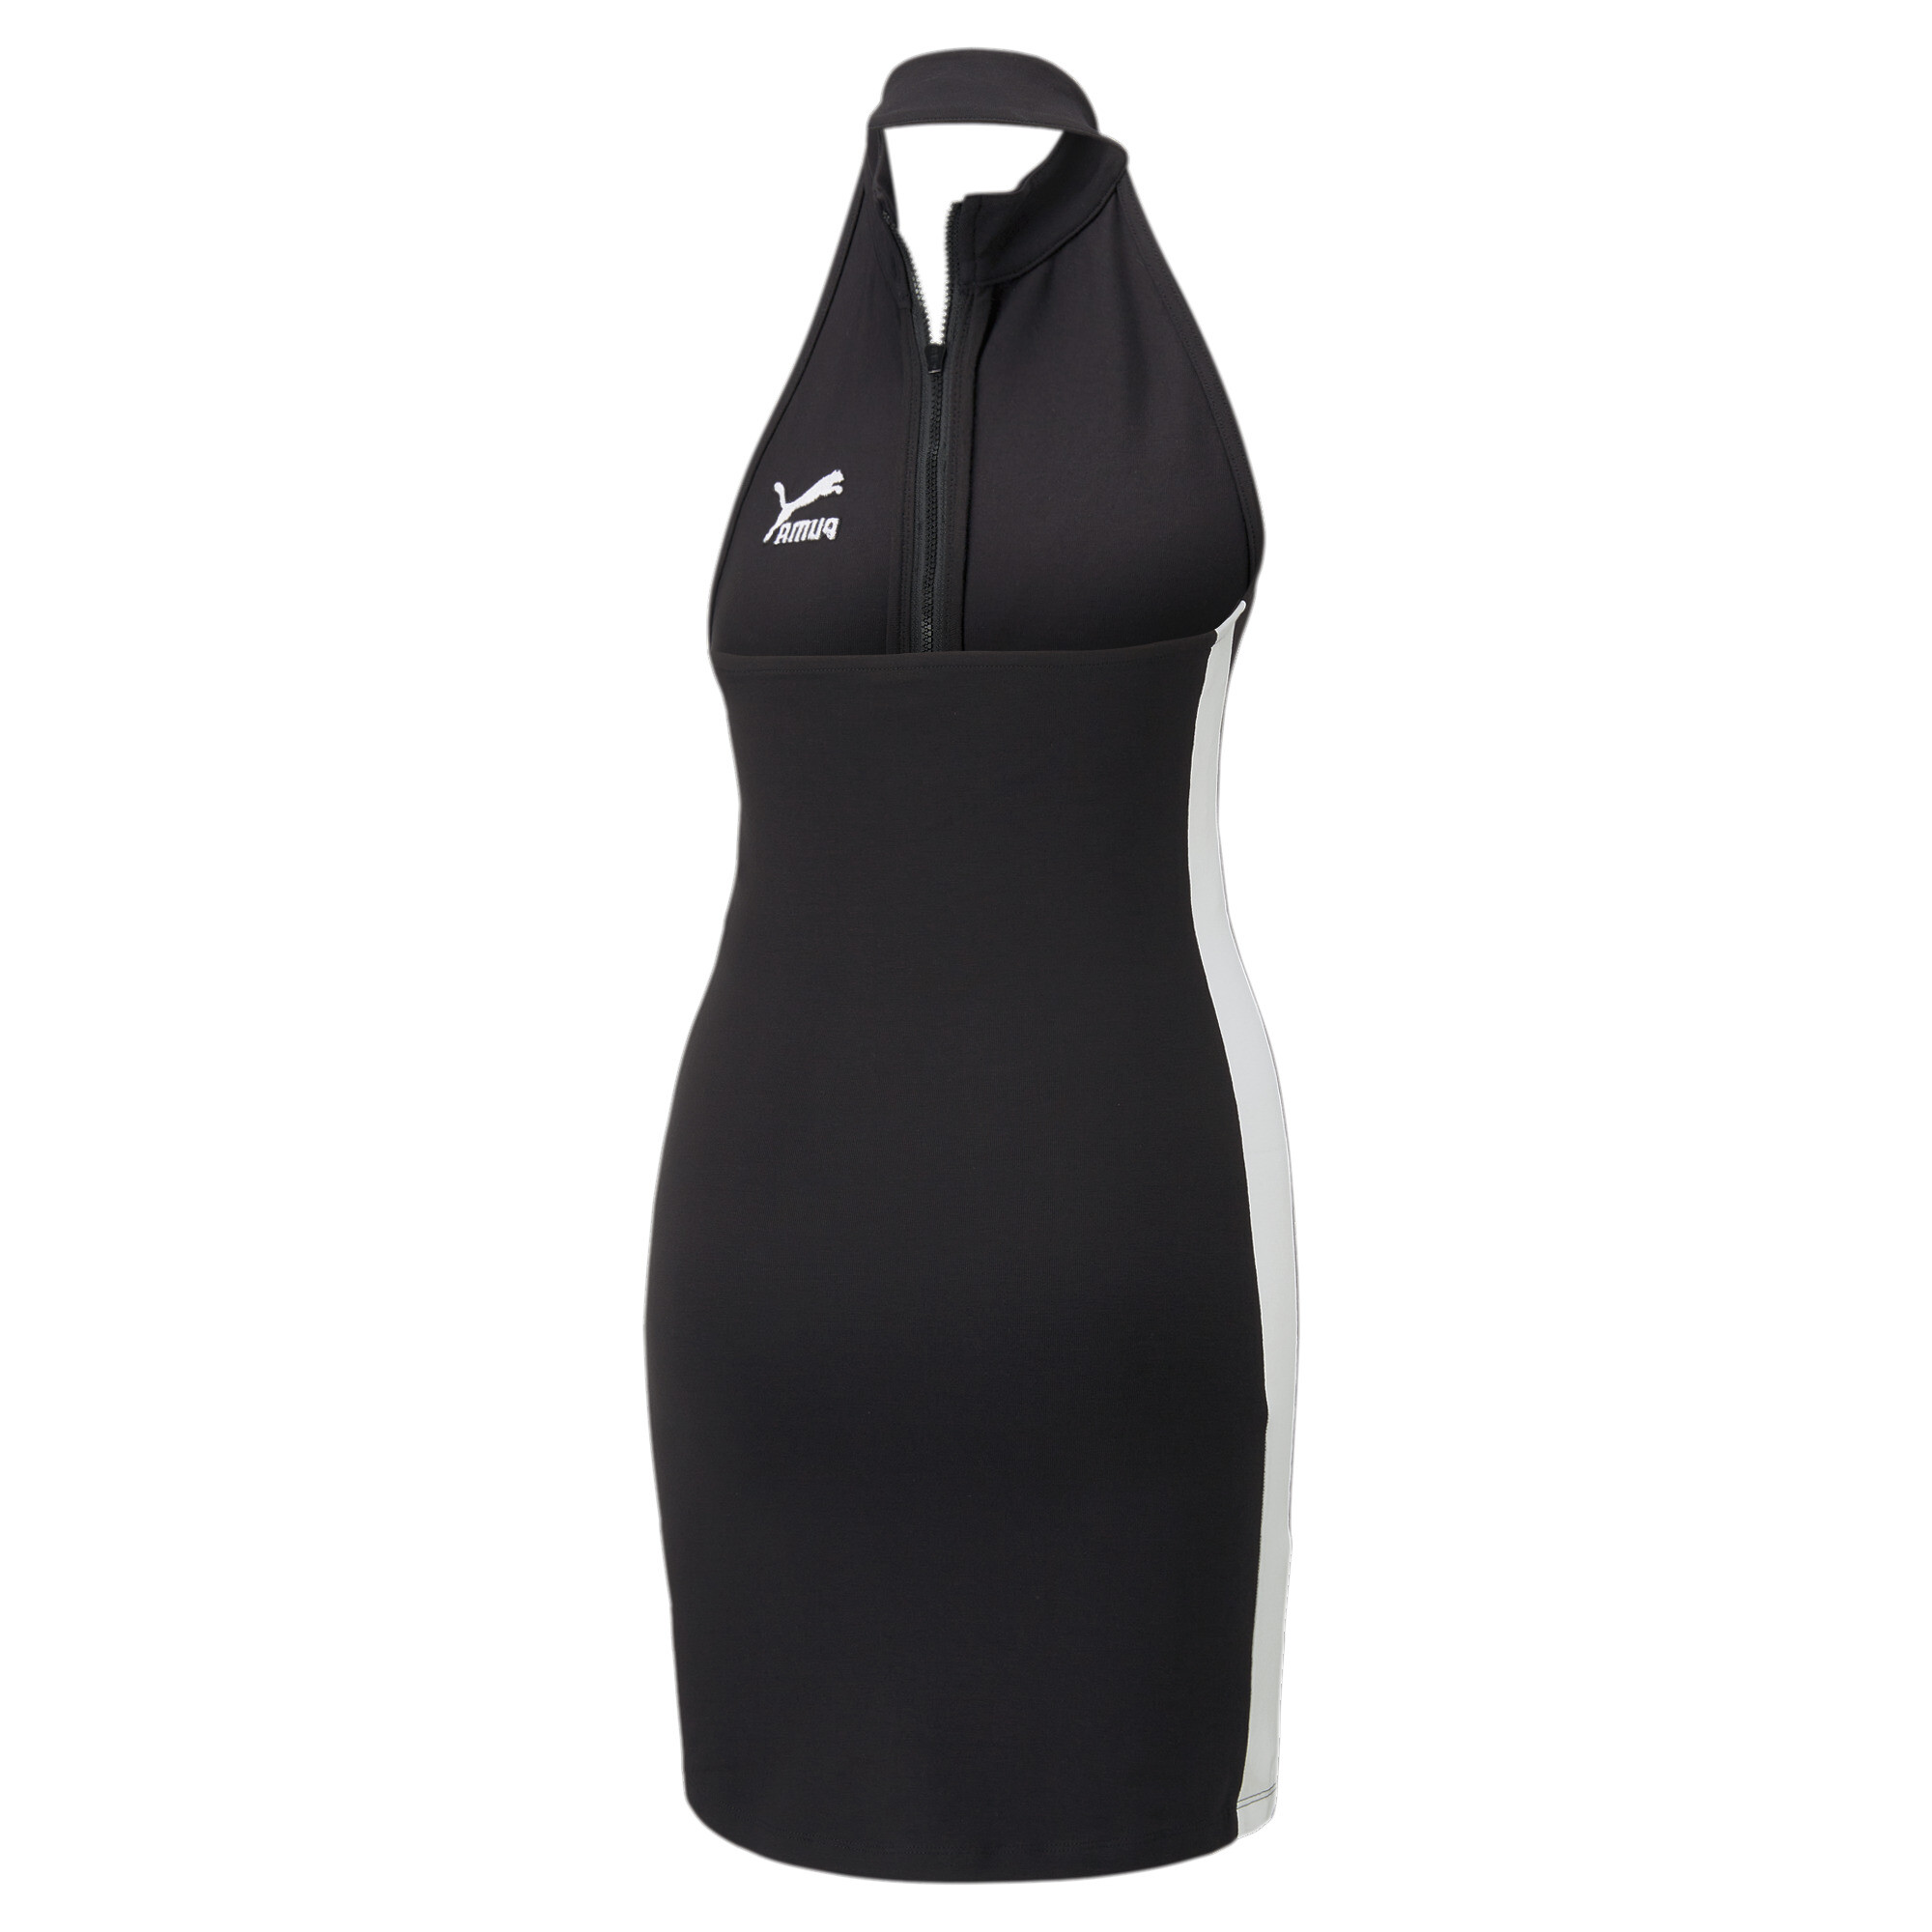 Women's PUMA T7 Half-Zip Mock Neck Dress Women In Black, Size Medium